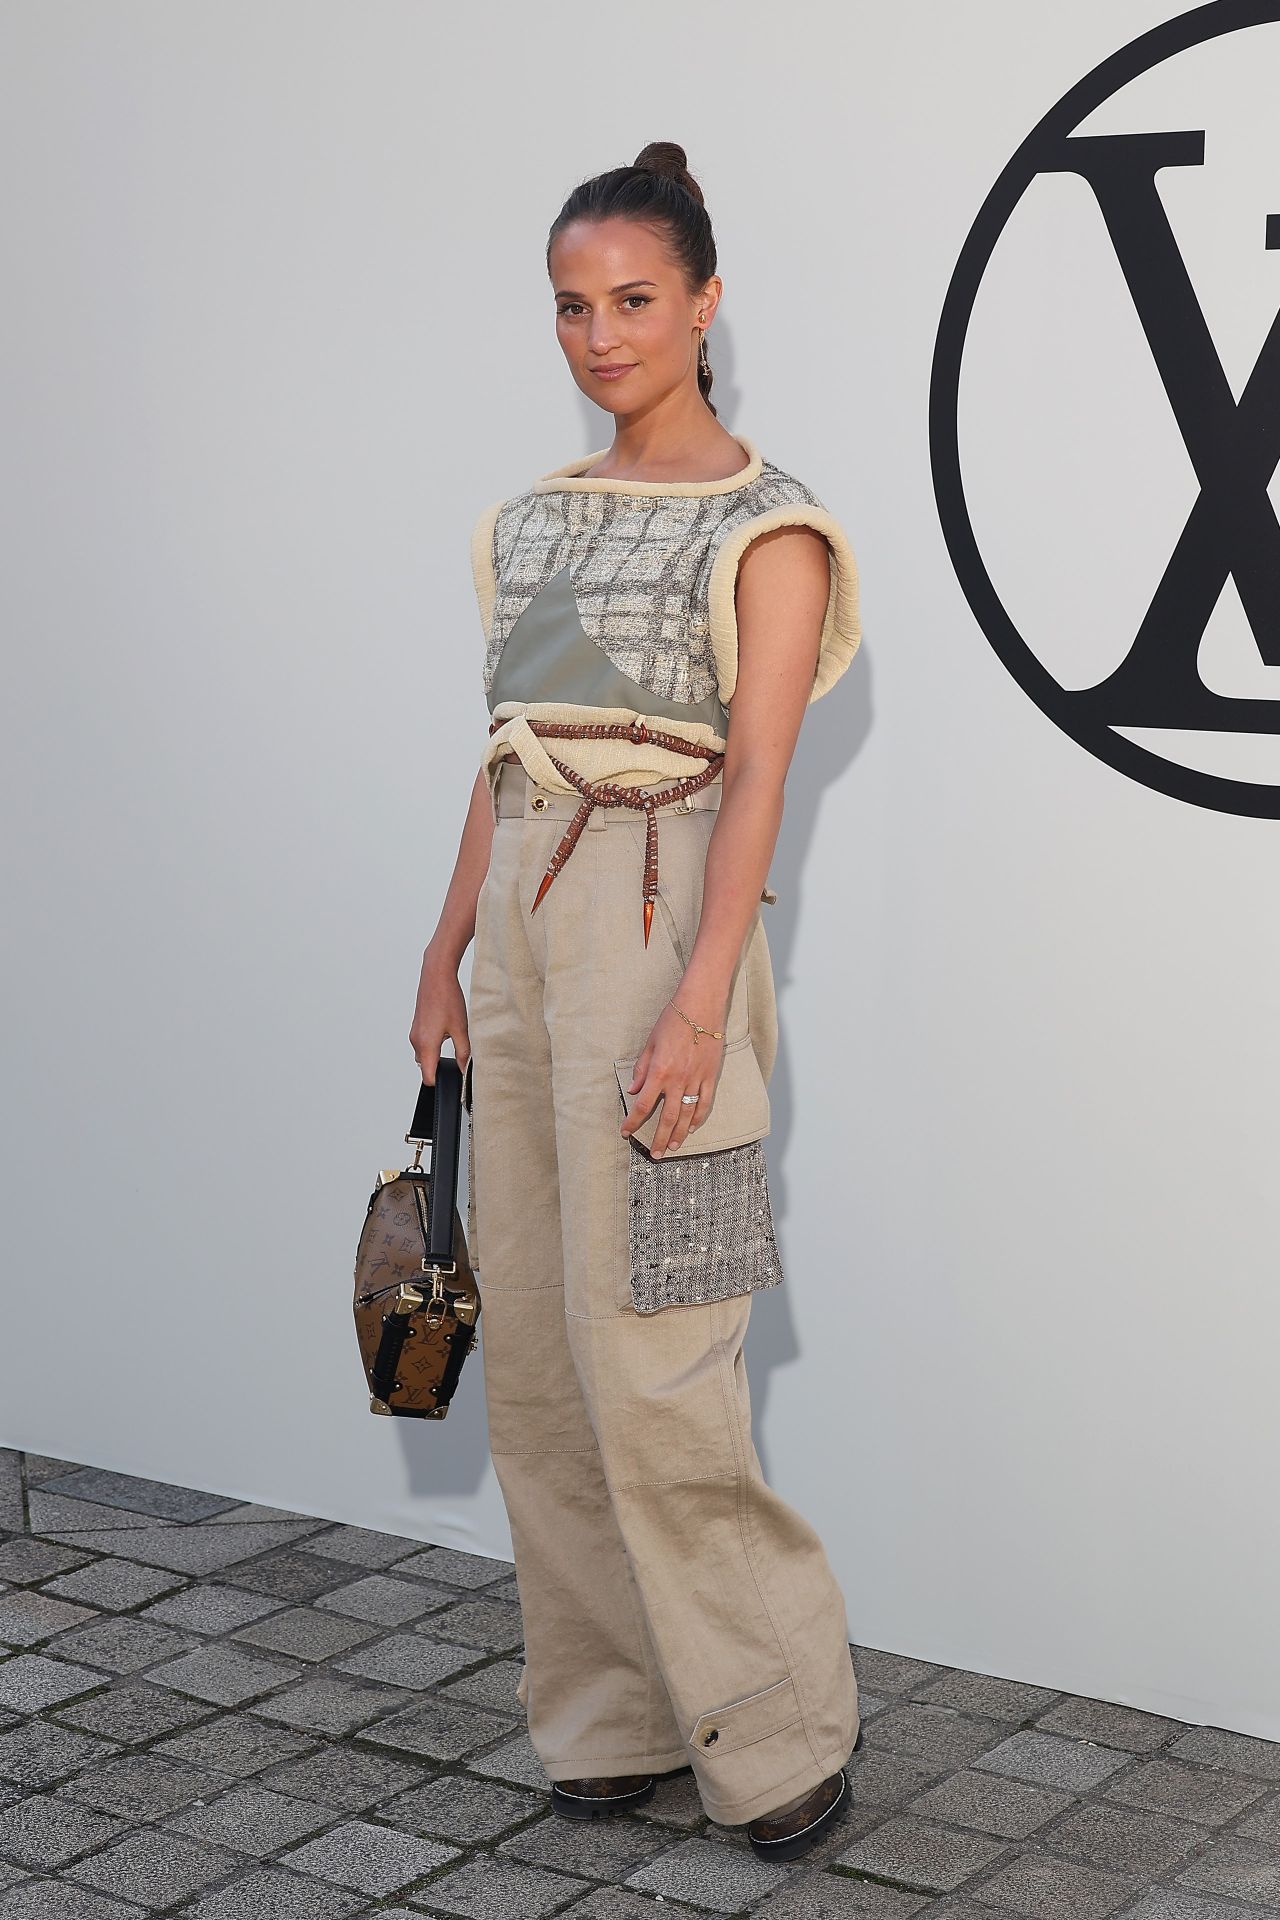 Oui fashionista!: This week - celebs in Louis Vuitton